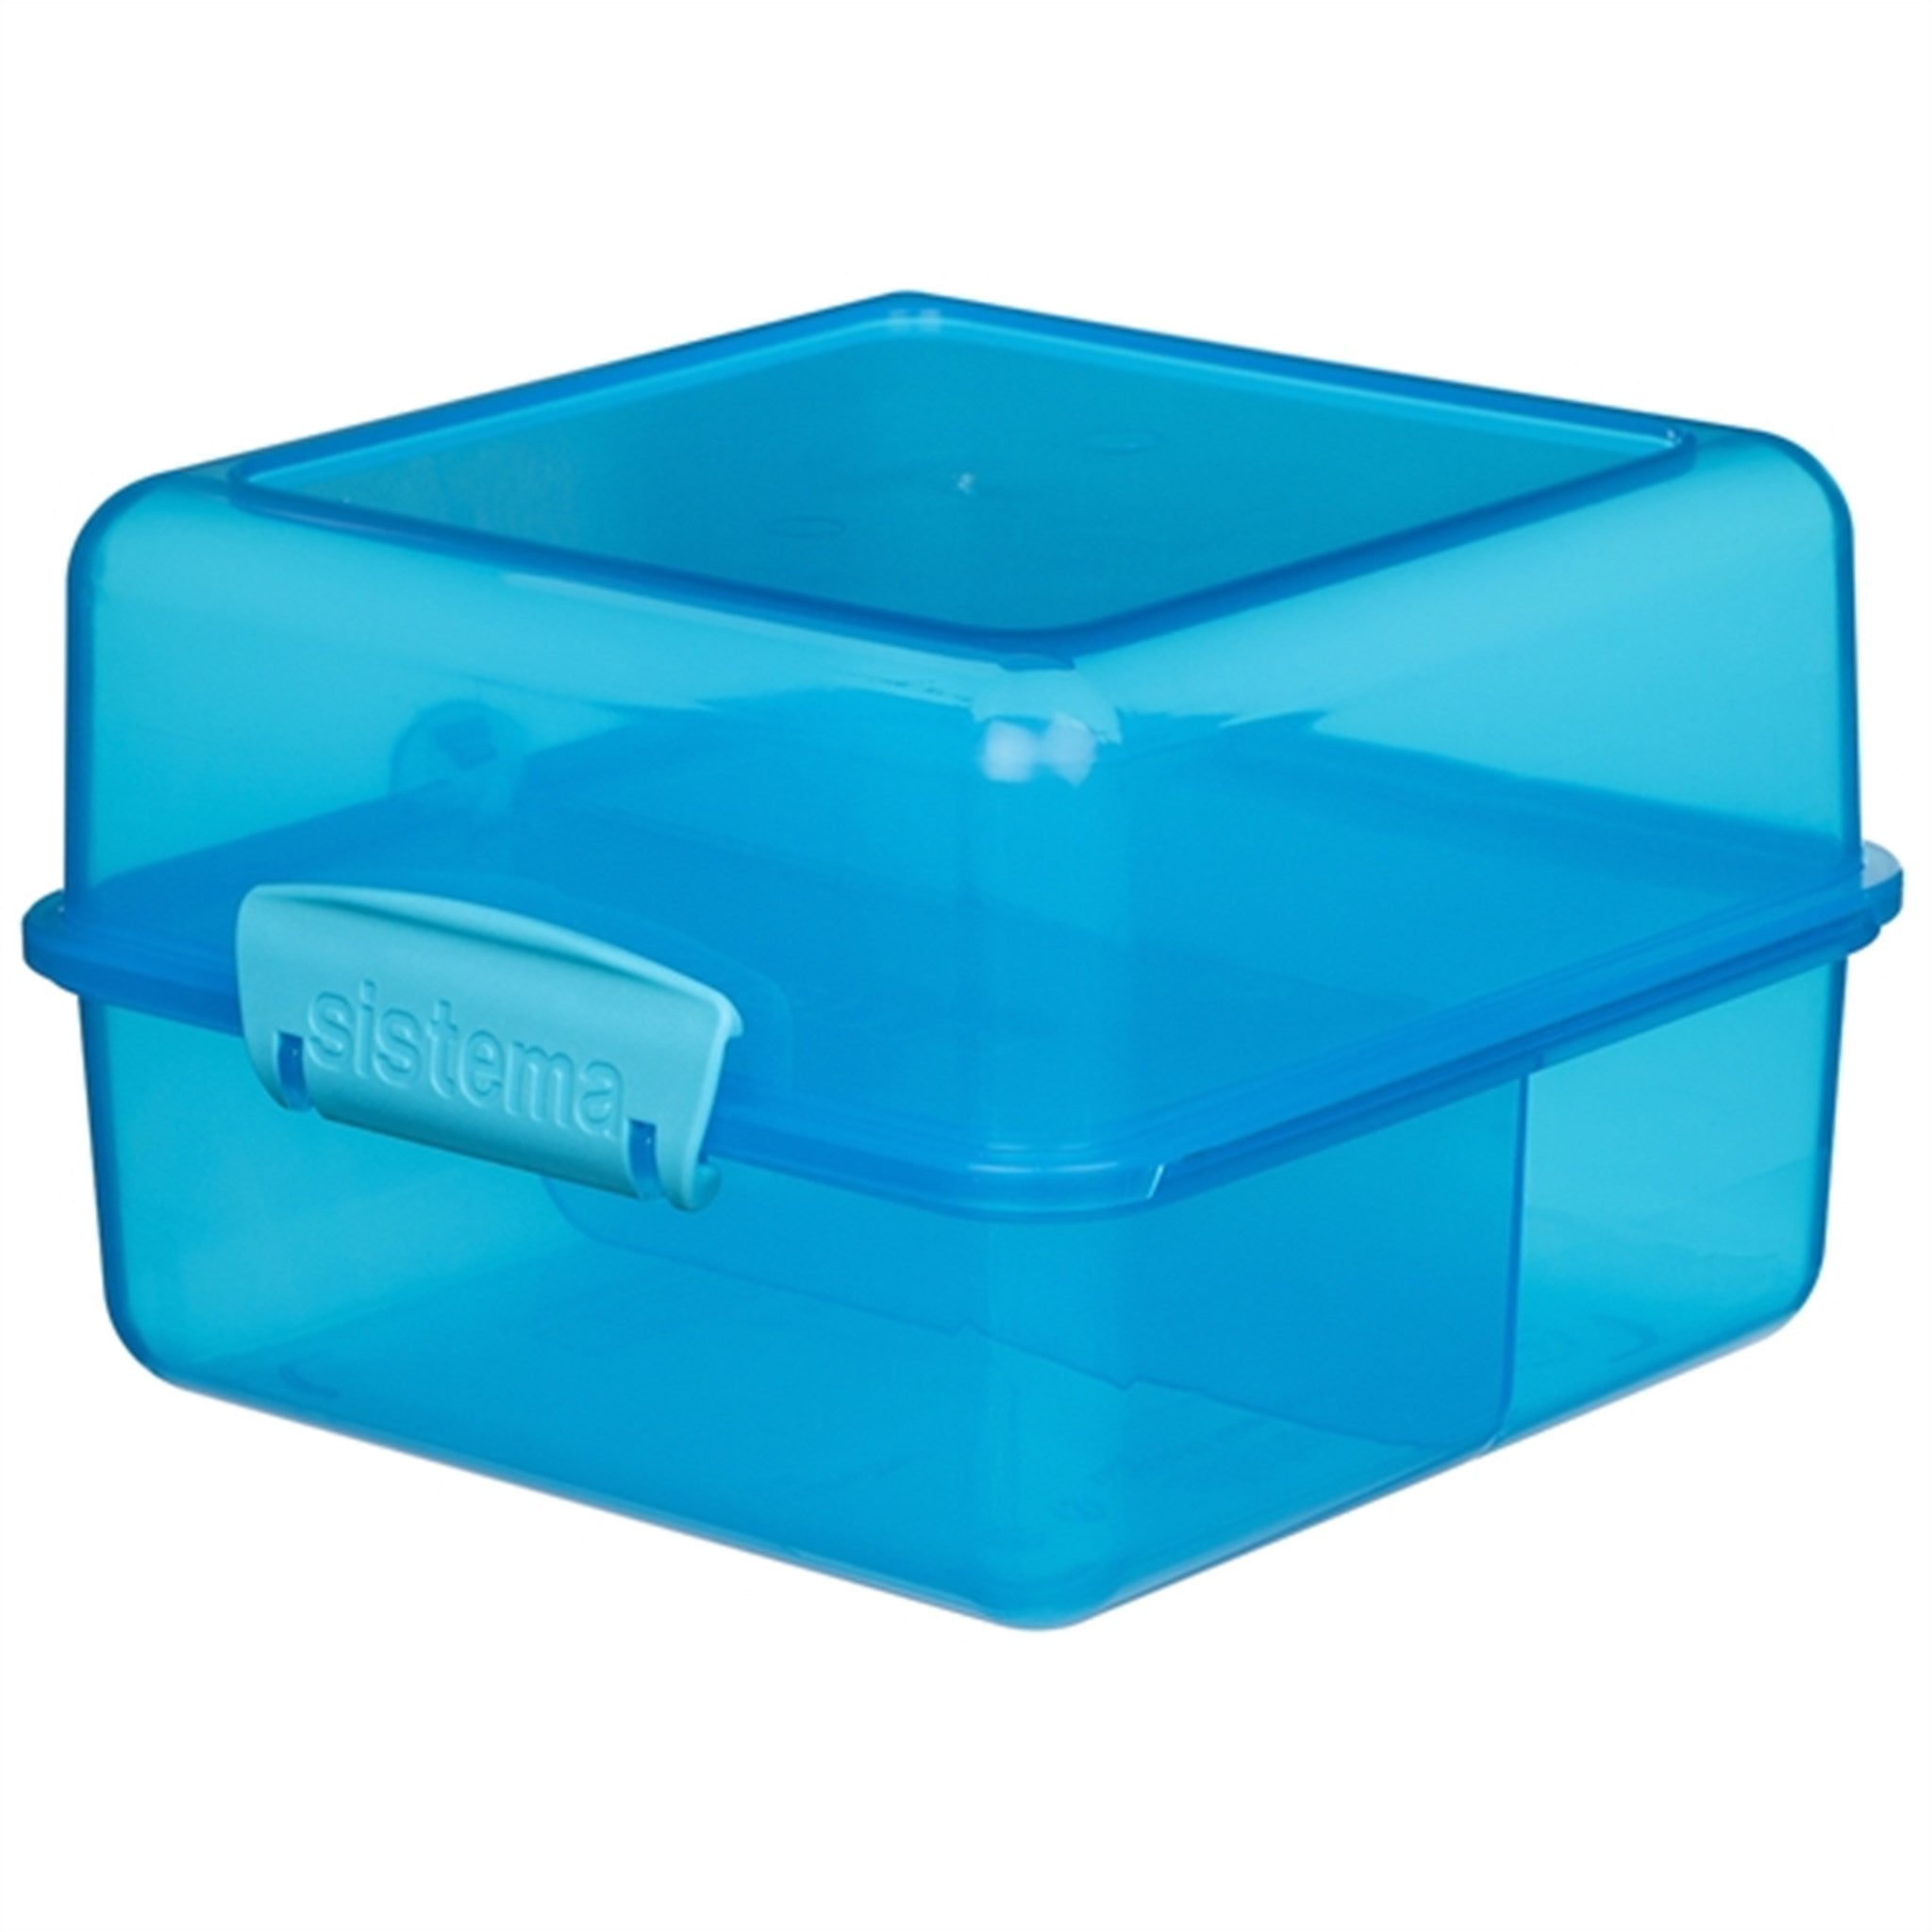 Sistema Lunch Cube Matboks 1,4 L Blå